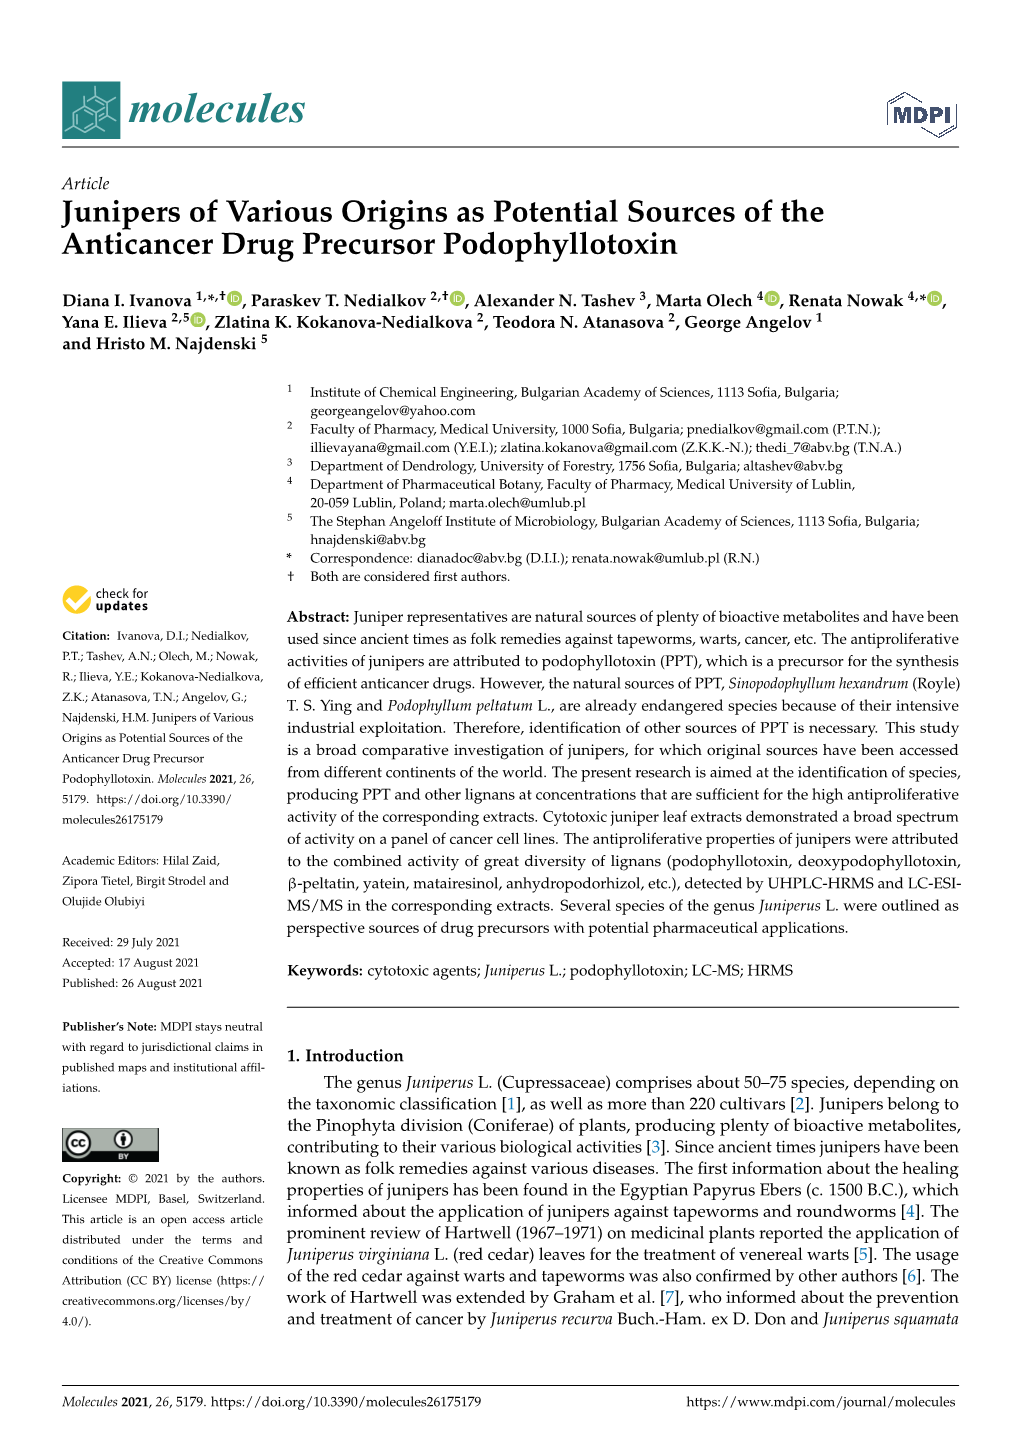 Junipers of Various Origins As Potential Sources of the Anticancer Drug Precursor Podophyllotoxin